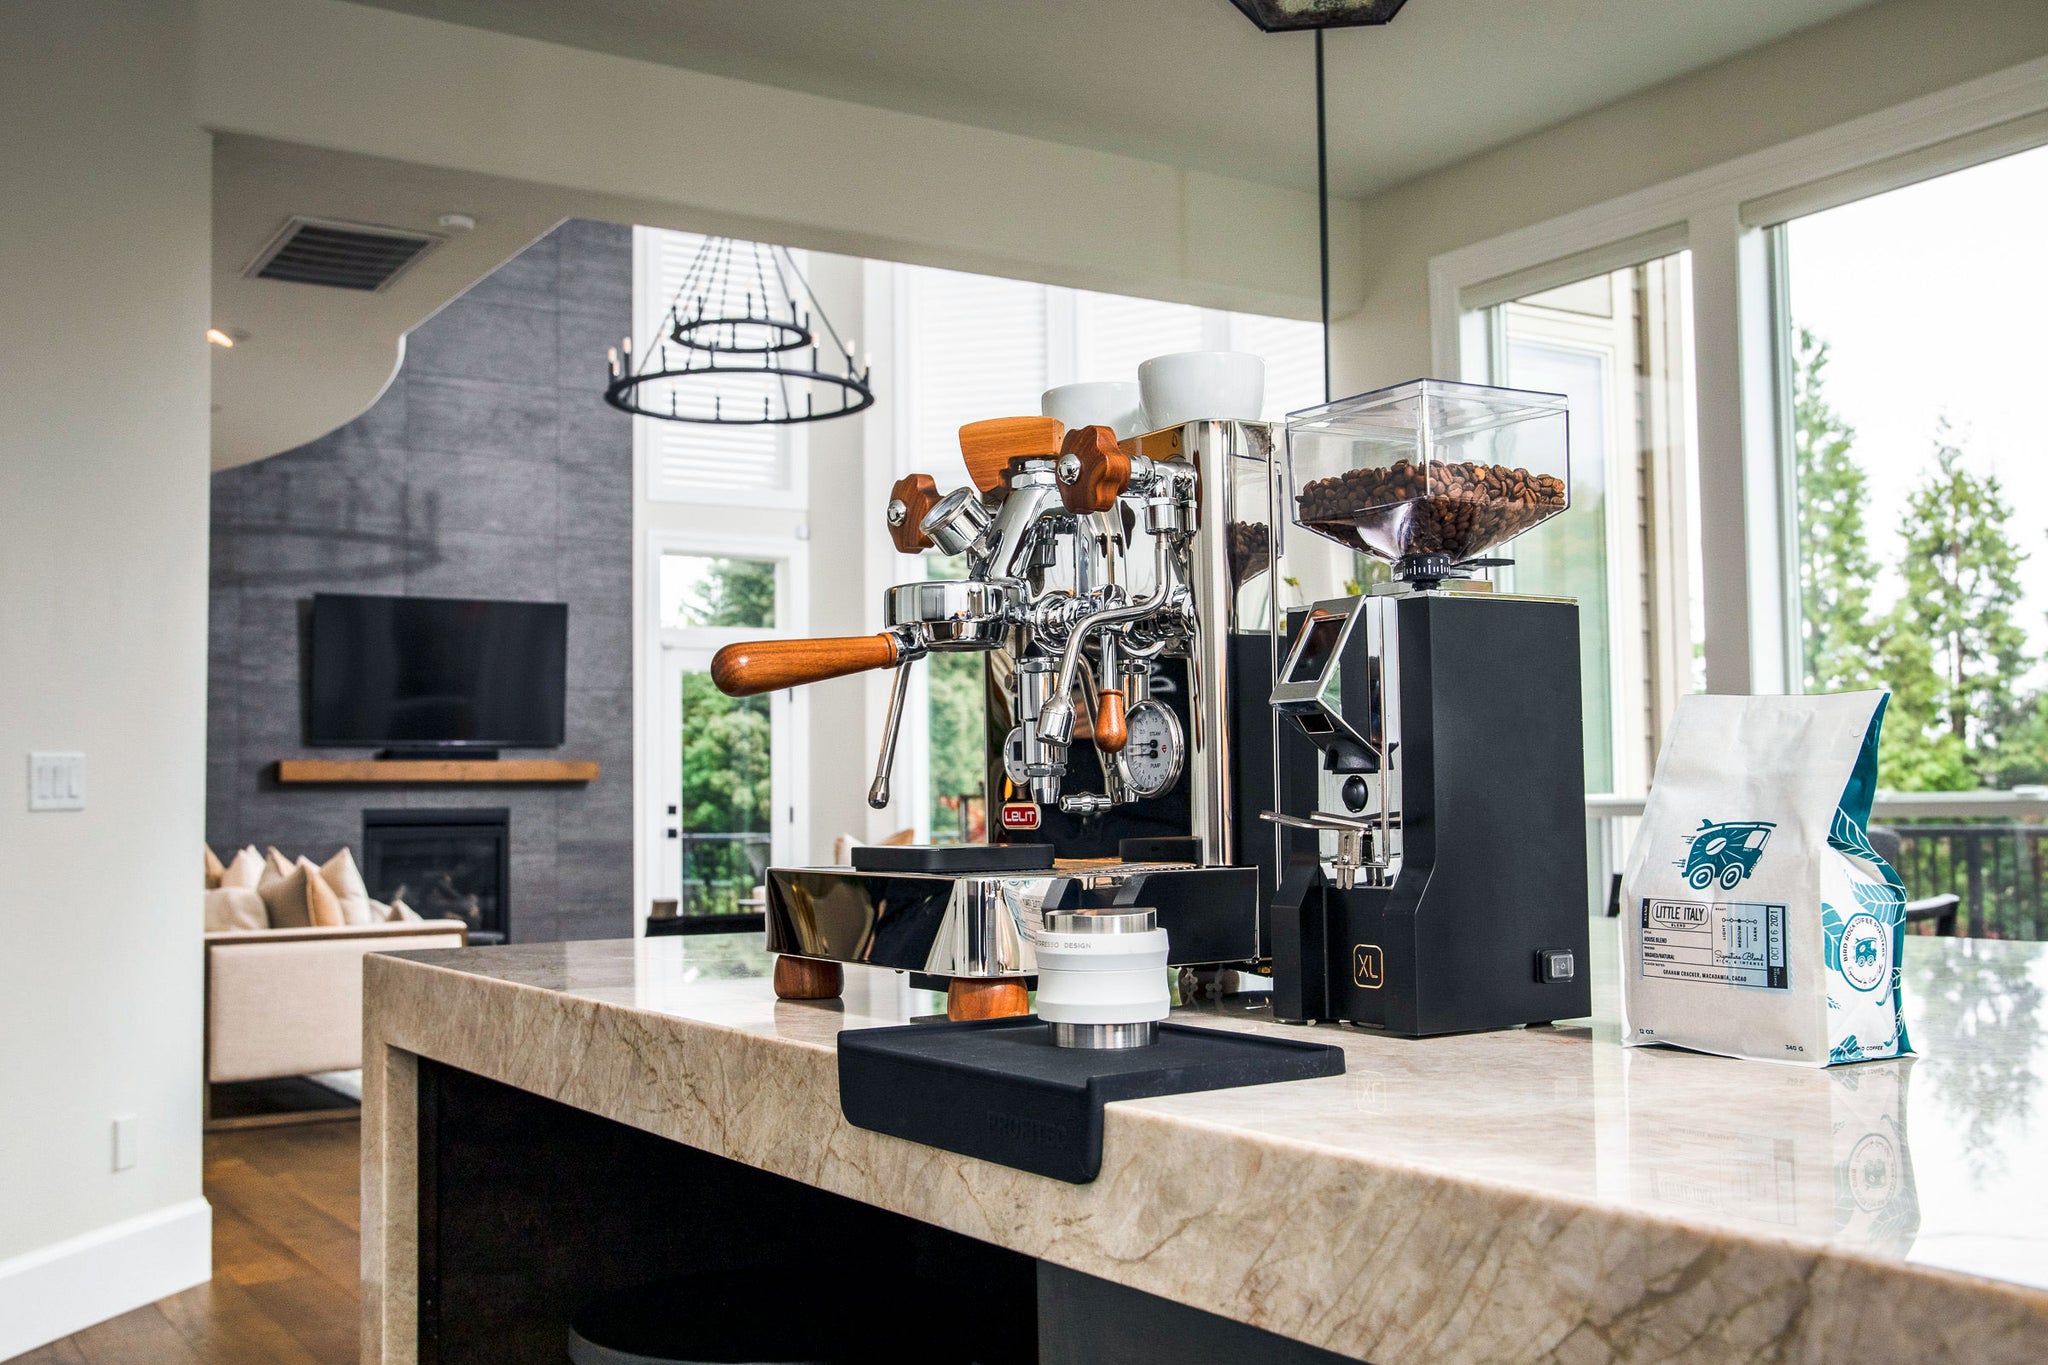 Lelit Bianca espresso machine with the Oro XL espresso grinder in black